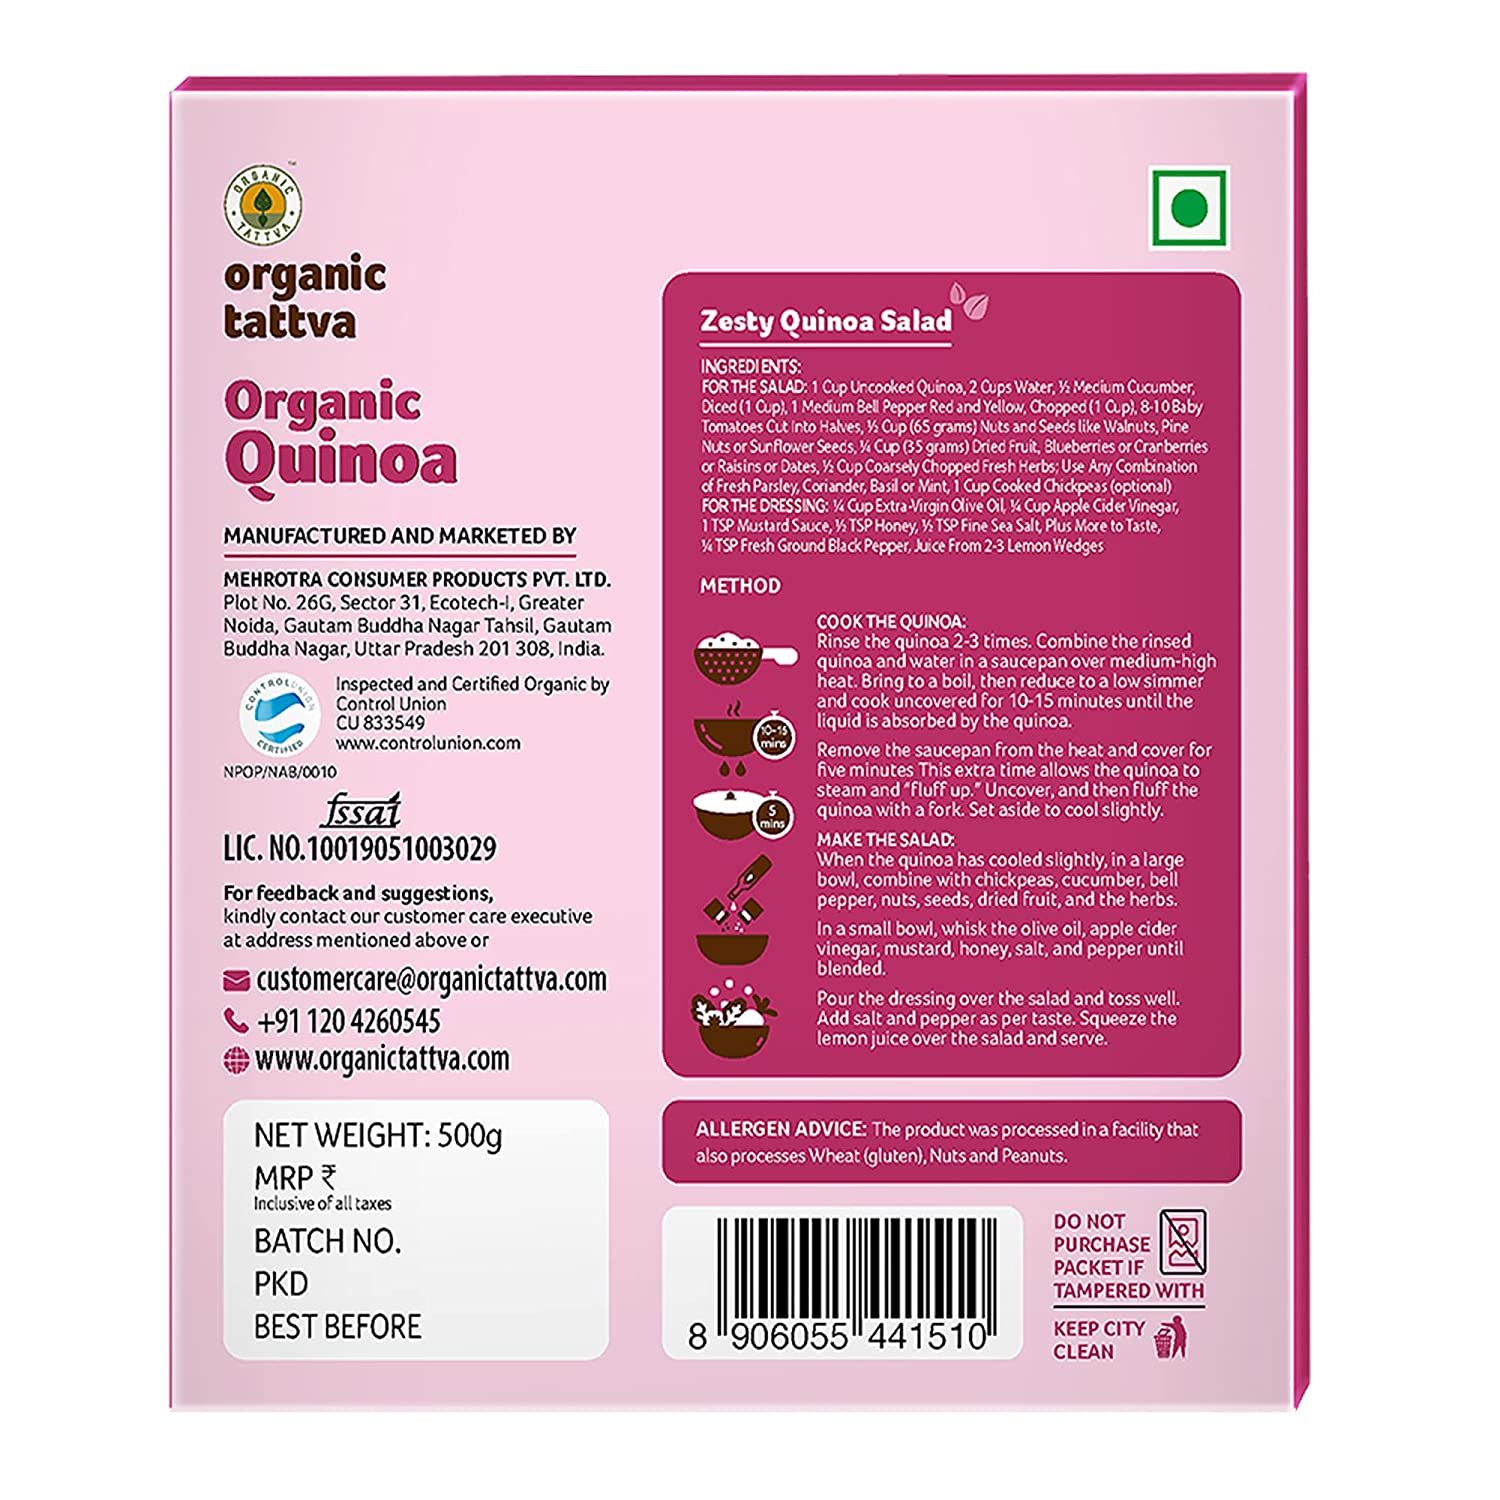 Organic Tattva Quinoa Image